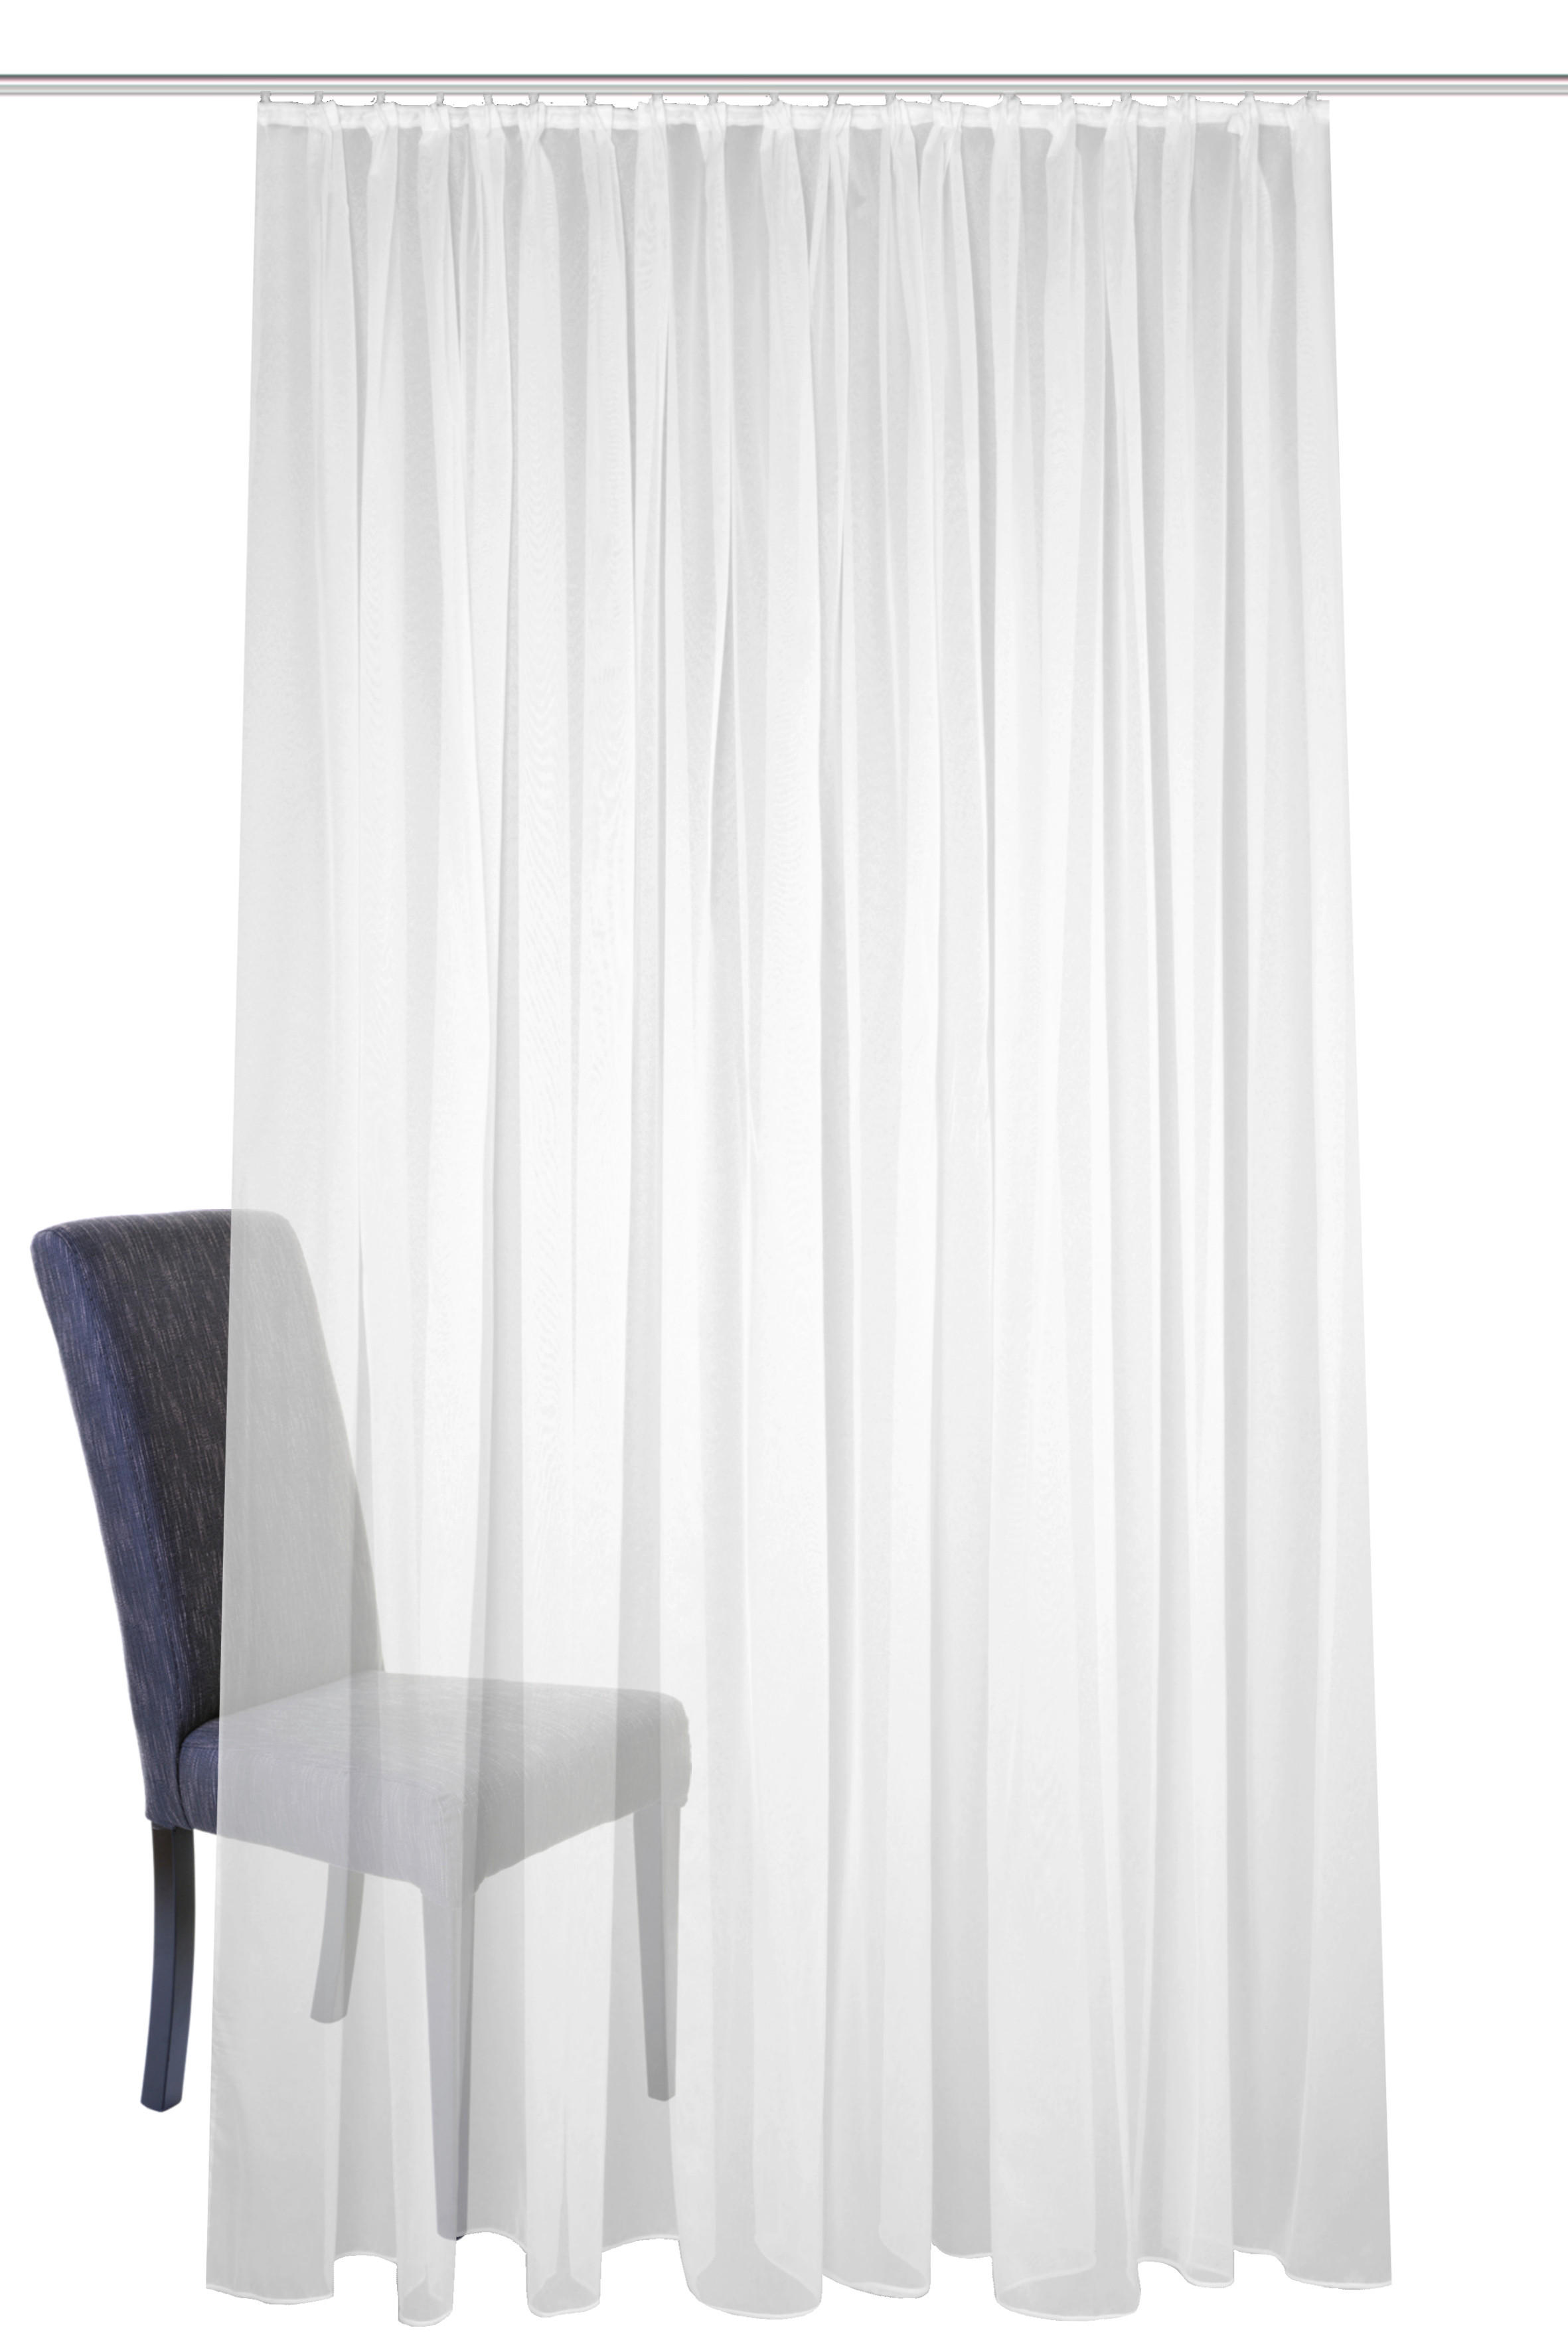 FERTIGSTORE  transparent  300/225 cm   - Weiß, Basics, Textil (300/225cm) - Schmidt W. Gmbh